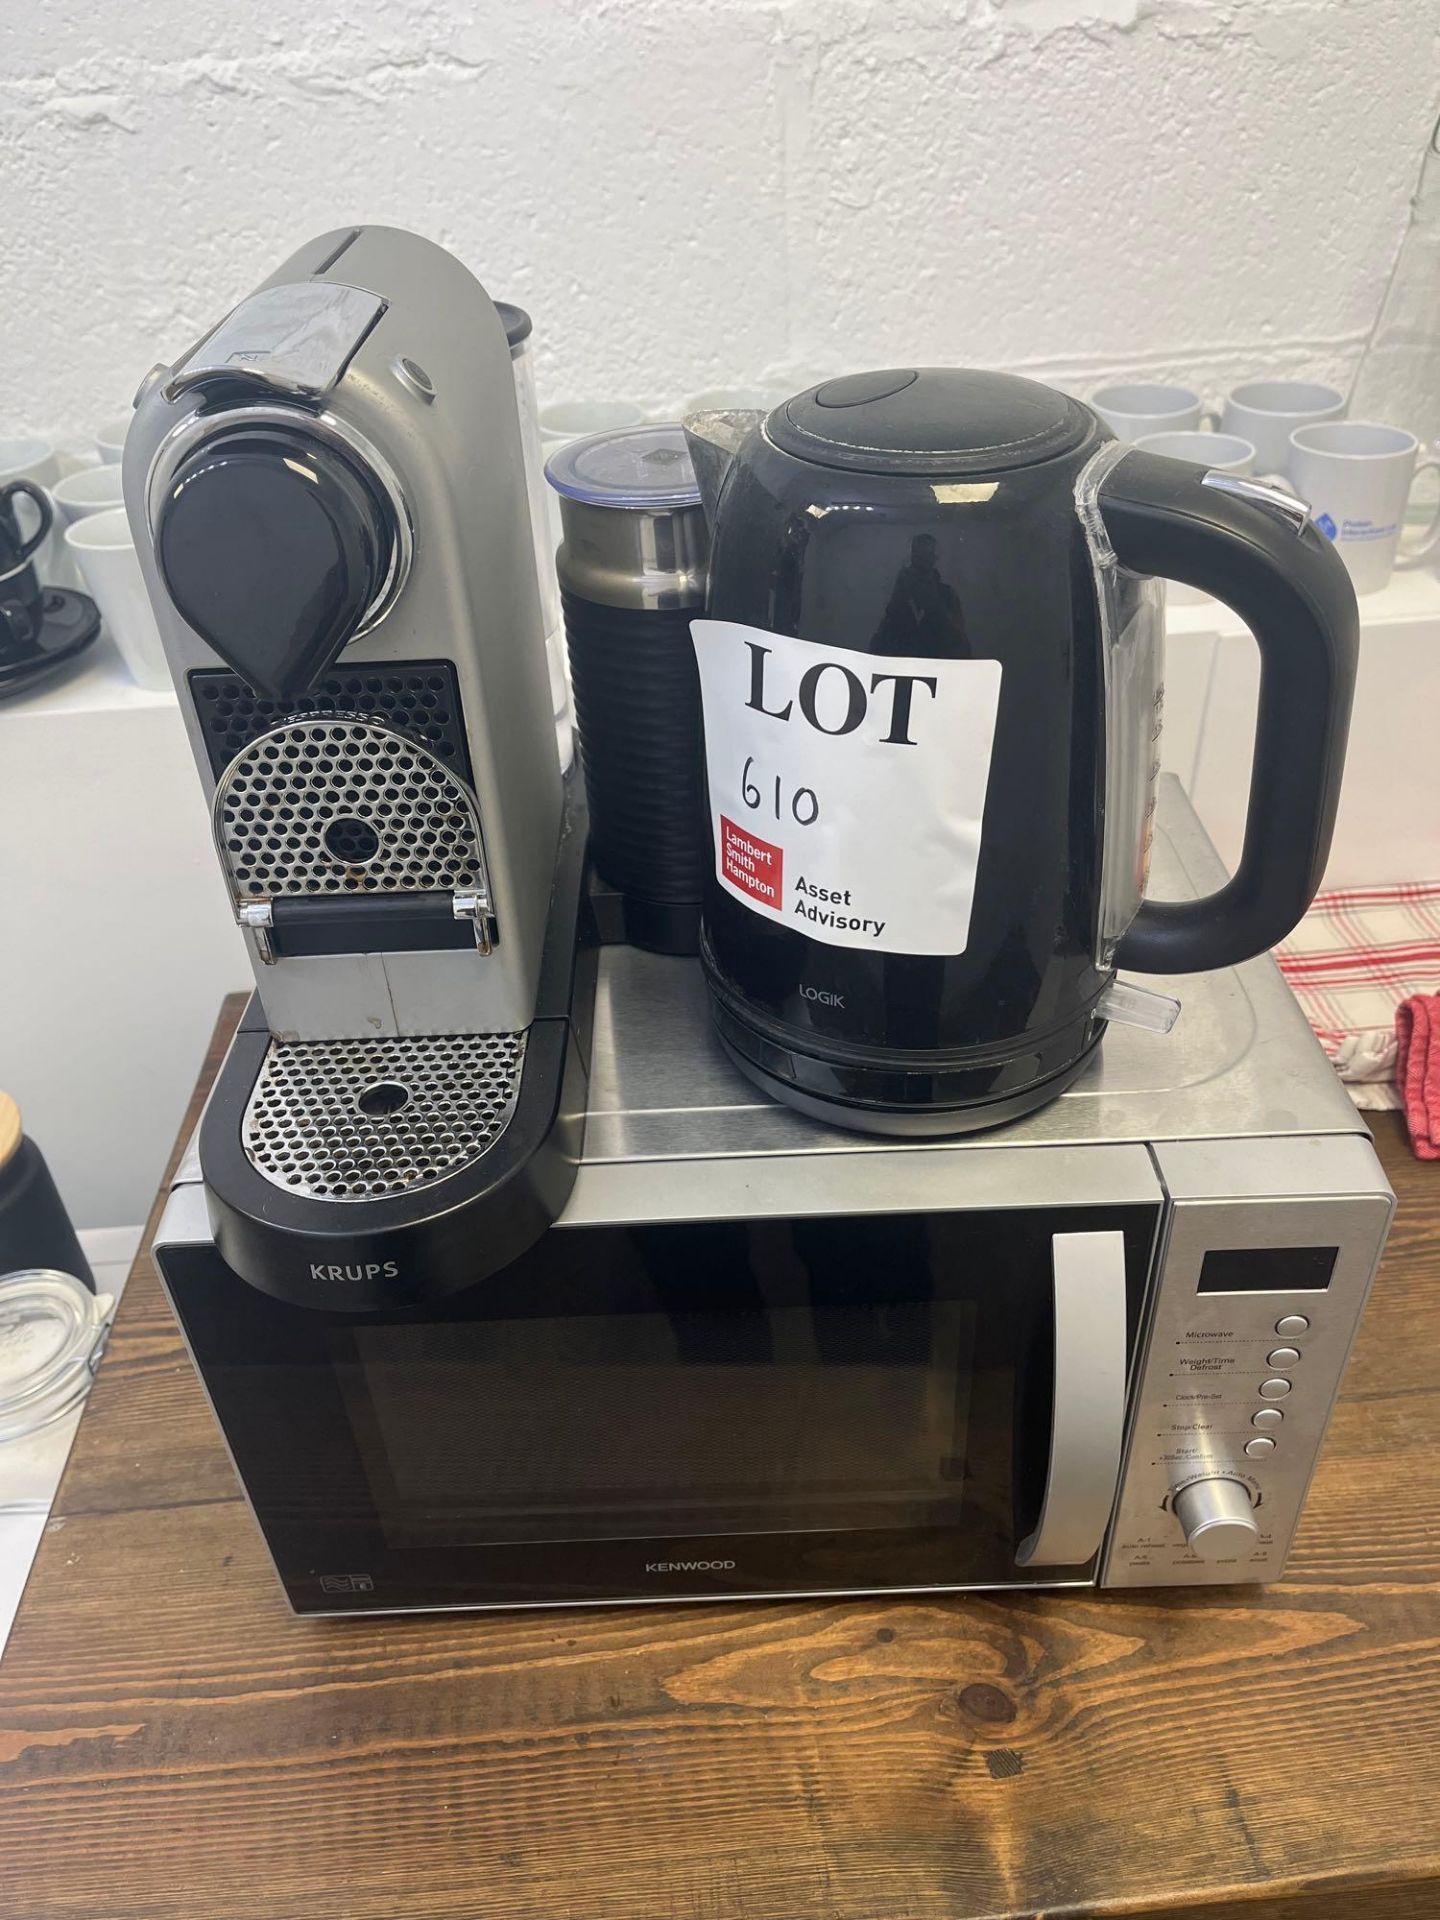 Kenwood domestic microwave, Krups coffee machine with Logik kettle